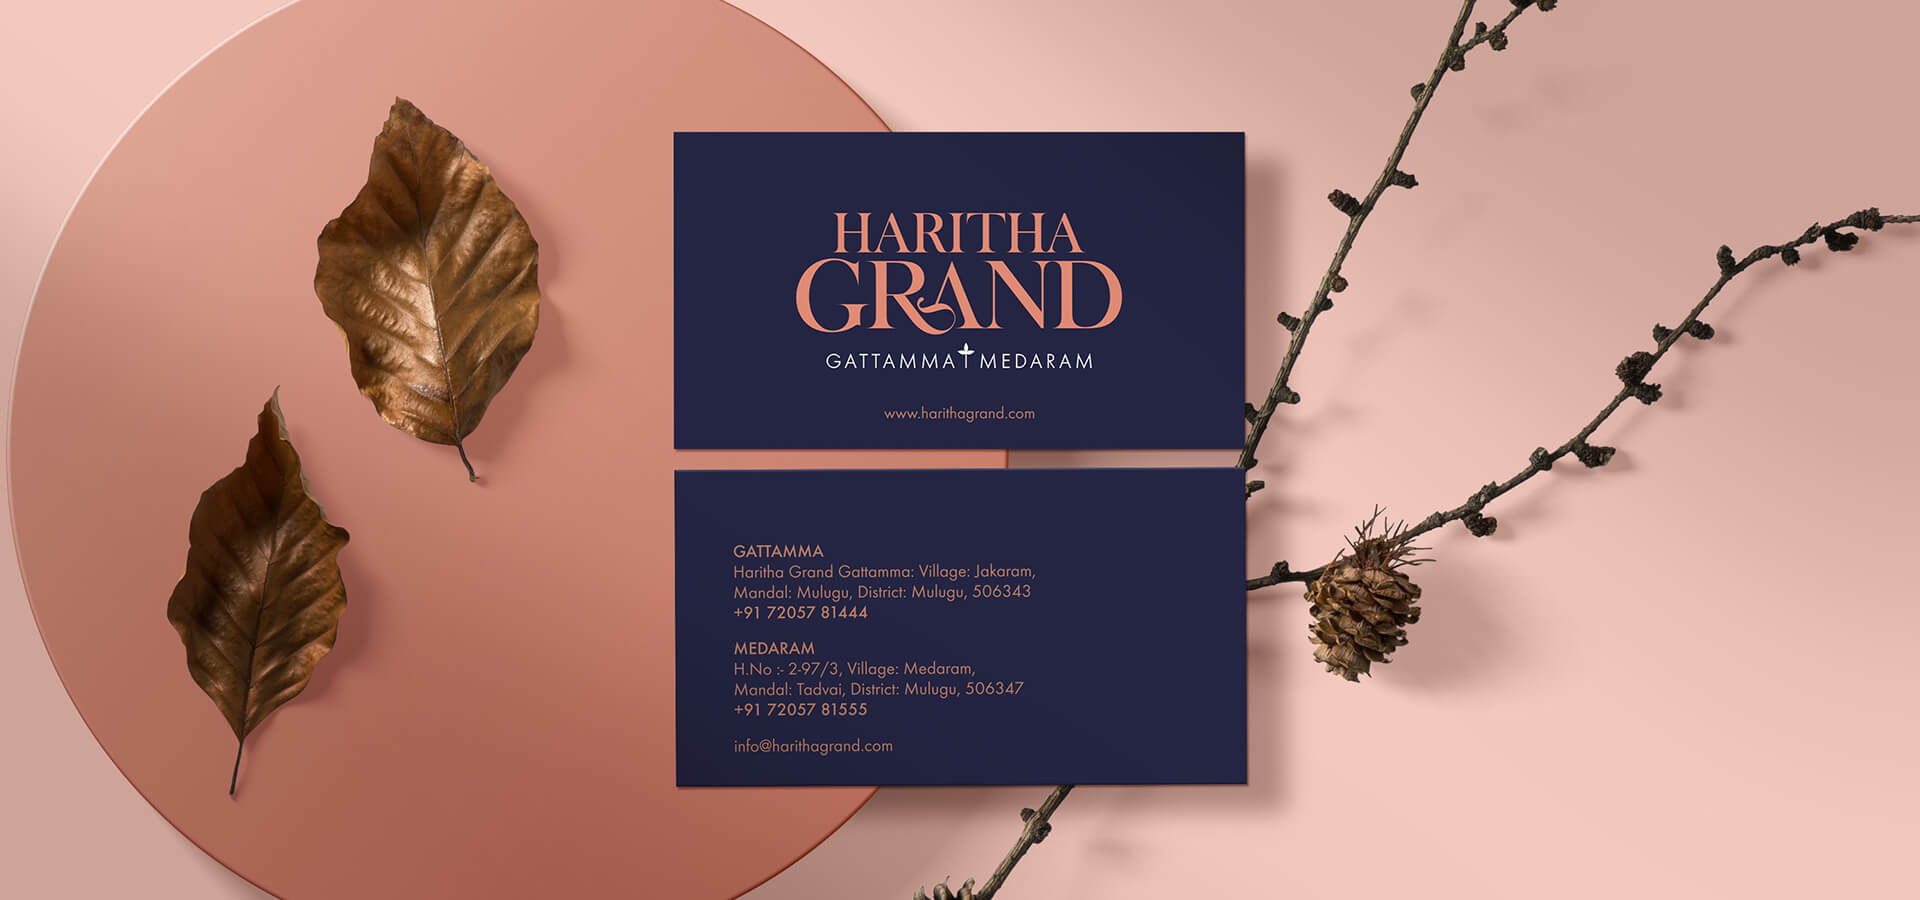 Haritha Grand Hotel in Telangana - Medaram Haritha Grand - Gattamma Haritha Grand - Hotel in Telangana